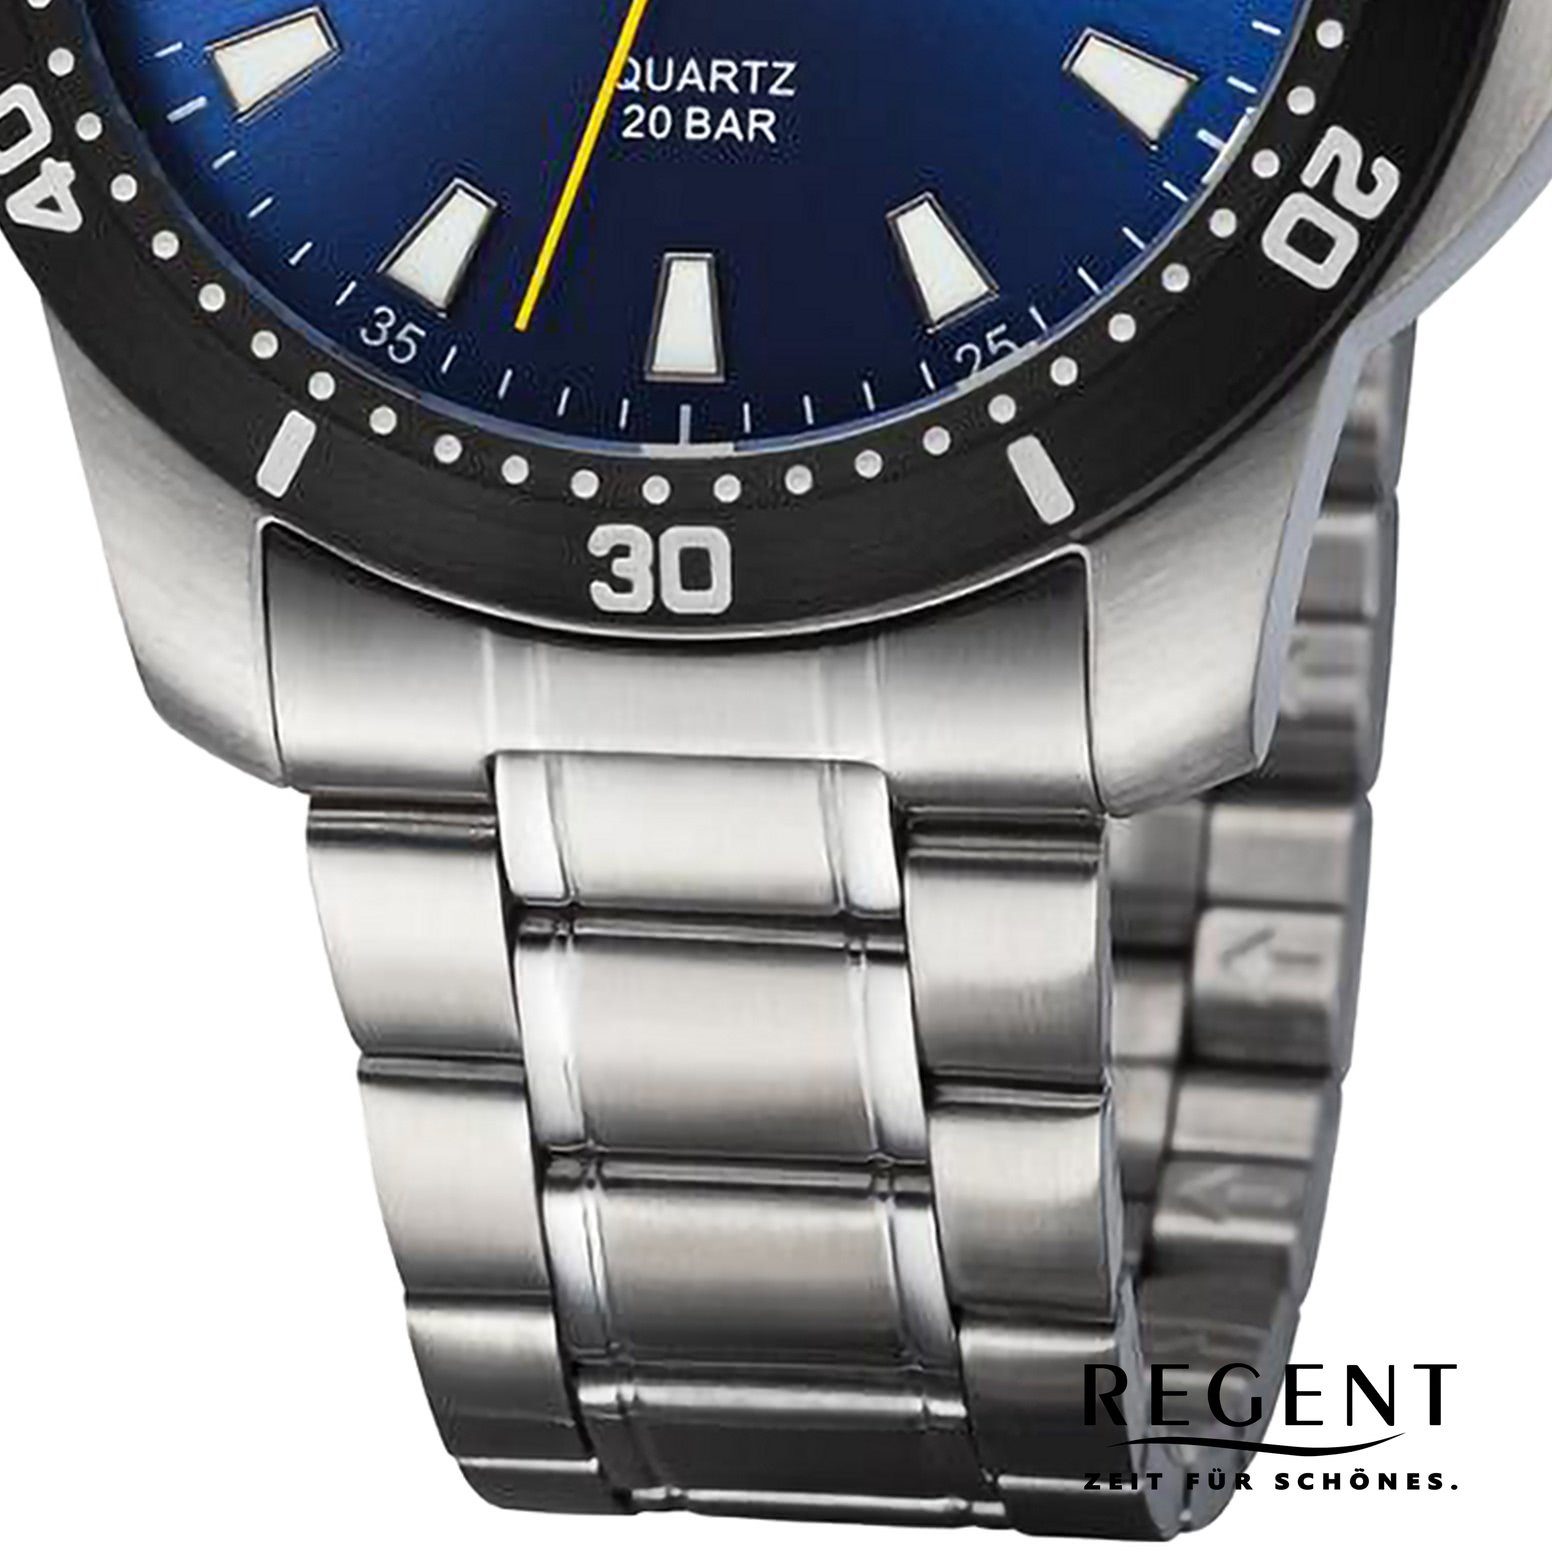 Regent Quarzuhr Regent Herren extra Armbanduhr (ca. Armbanduhr Herren groß rund, Analog, Metallarmband 40mm)